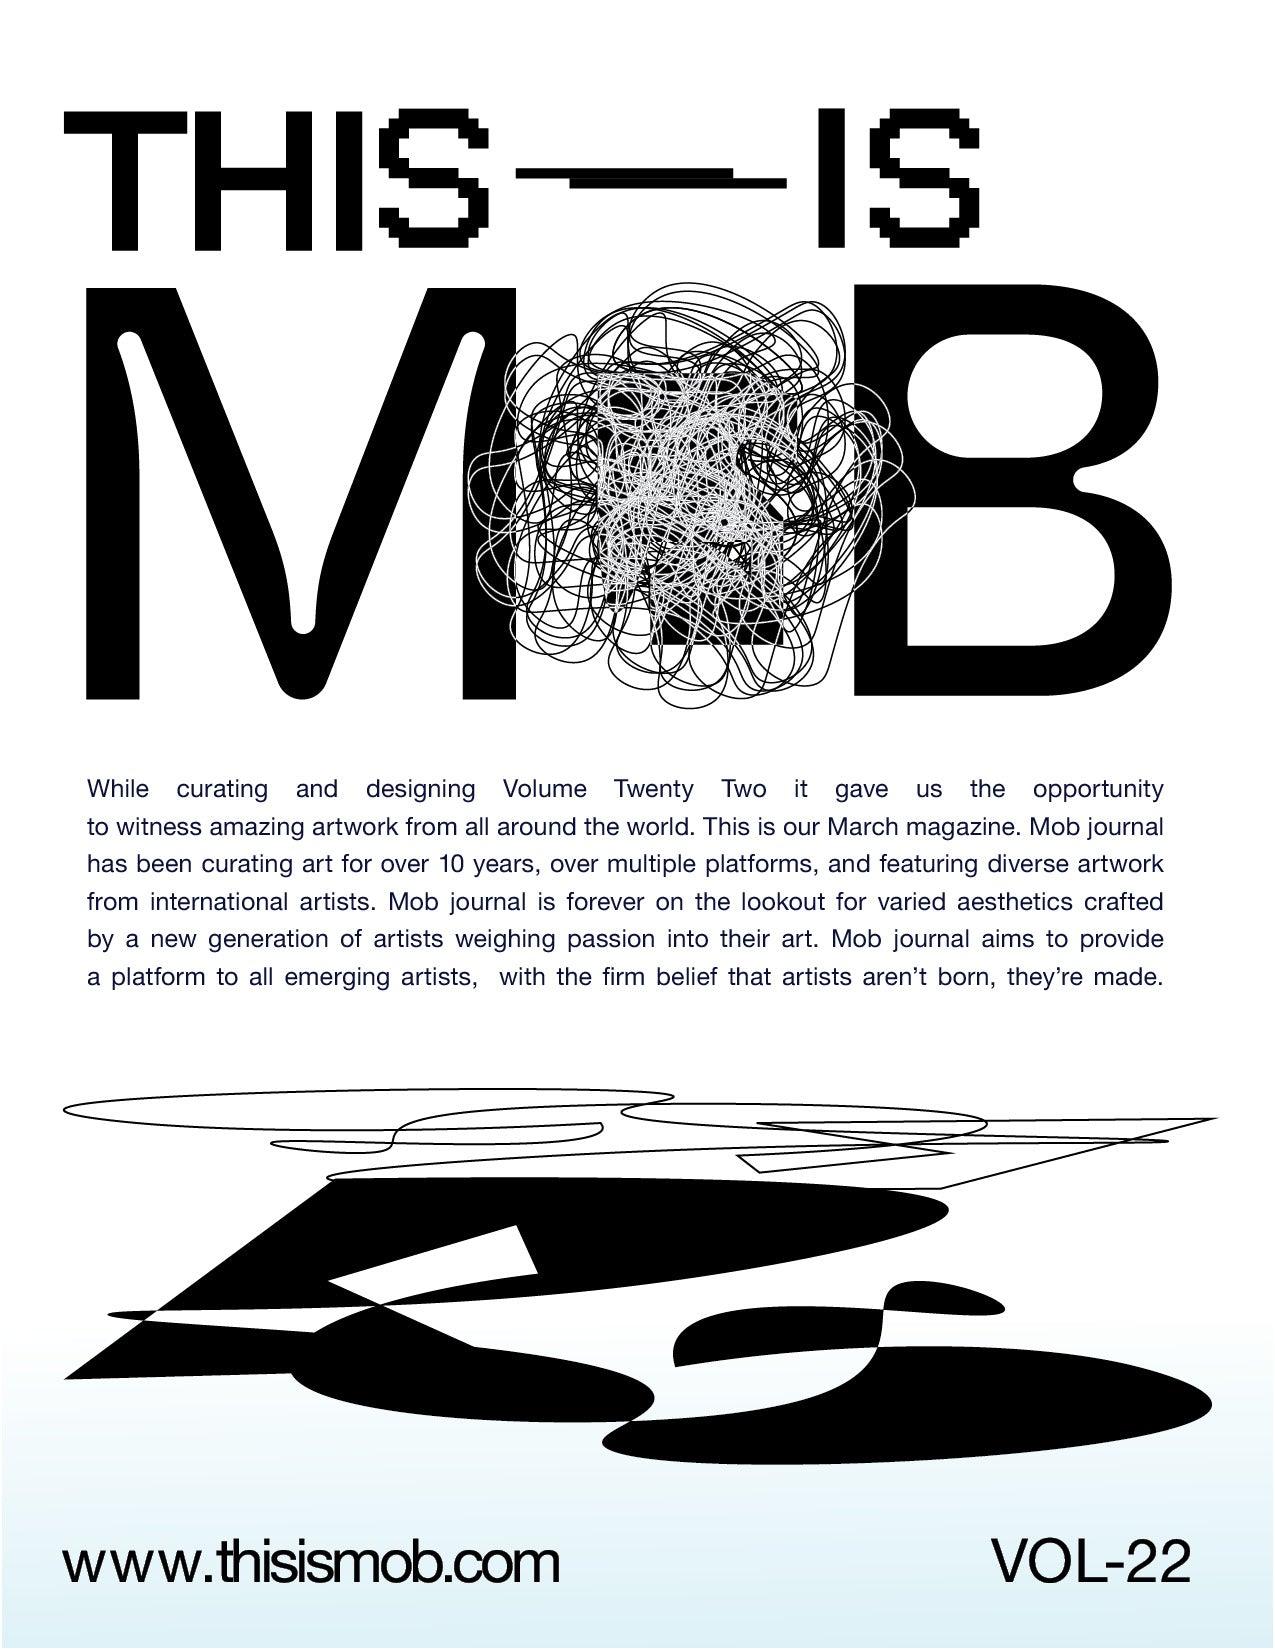 MOB JOURNAL | VOLUME TWENTY TWO | ISSUE #20 - Mob Journal